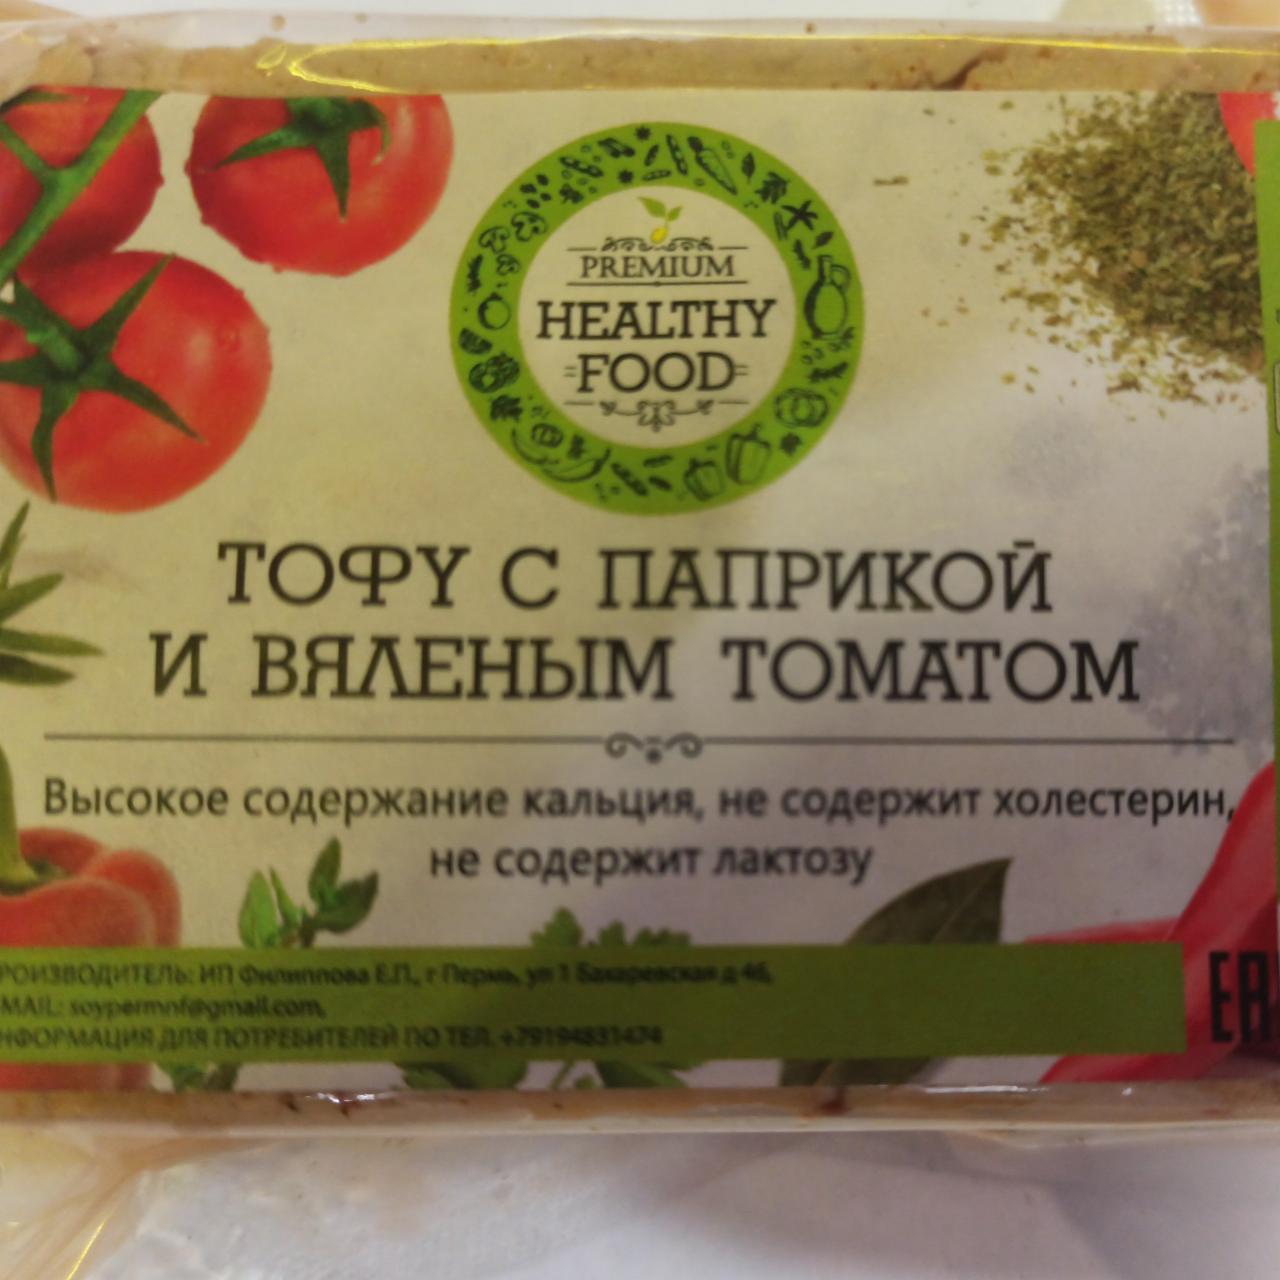 Фото - Тофу с паприкой и вялеными томатами Vegan